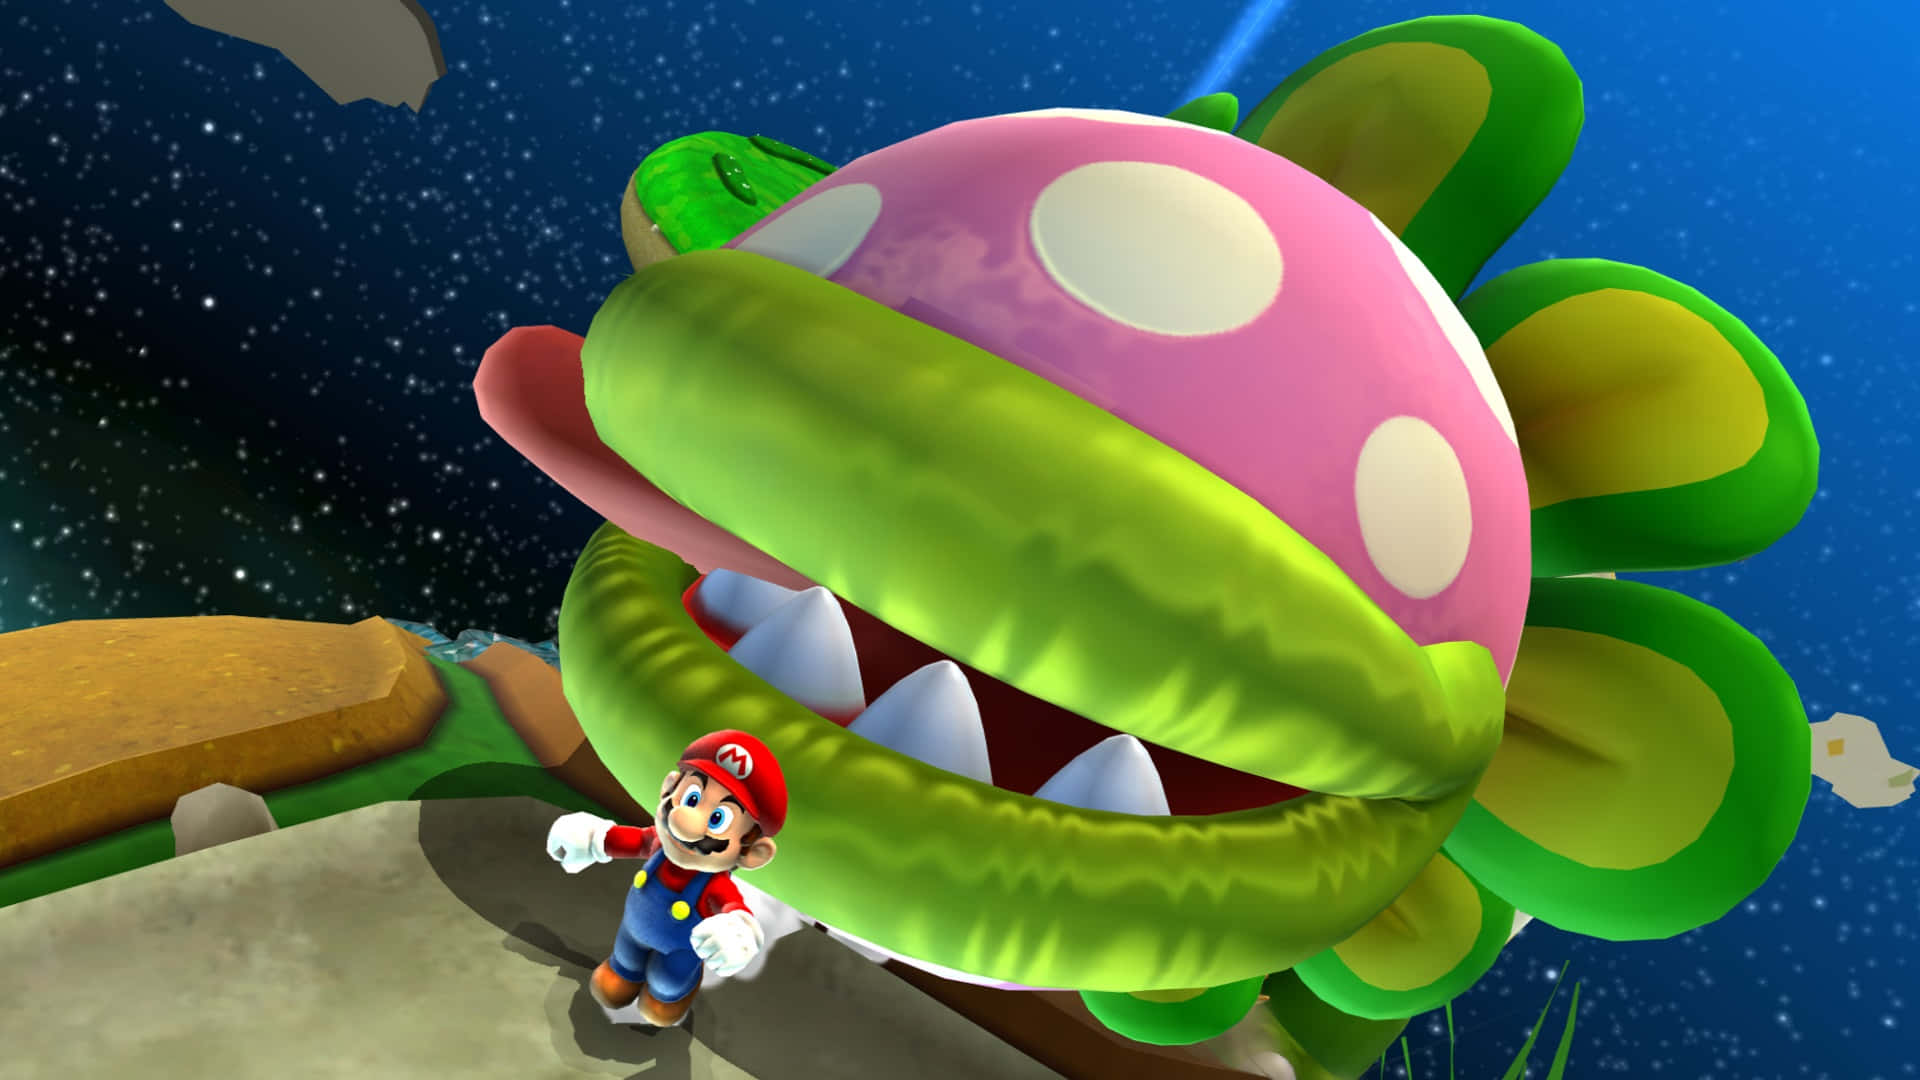 Super Mario soaring through the star-studded universe in Super Mario Galaxy 2 Wallpaper